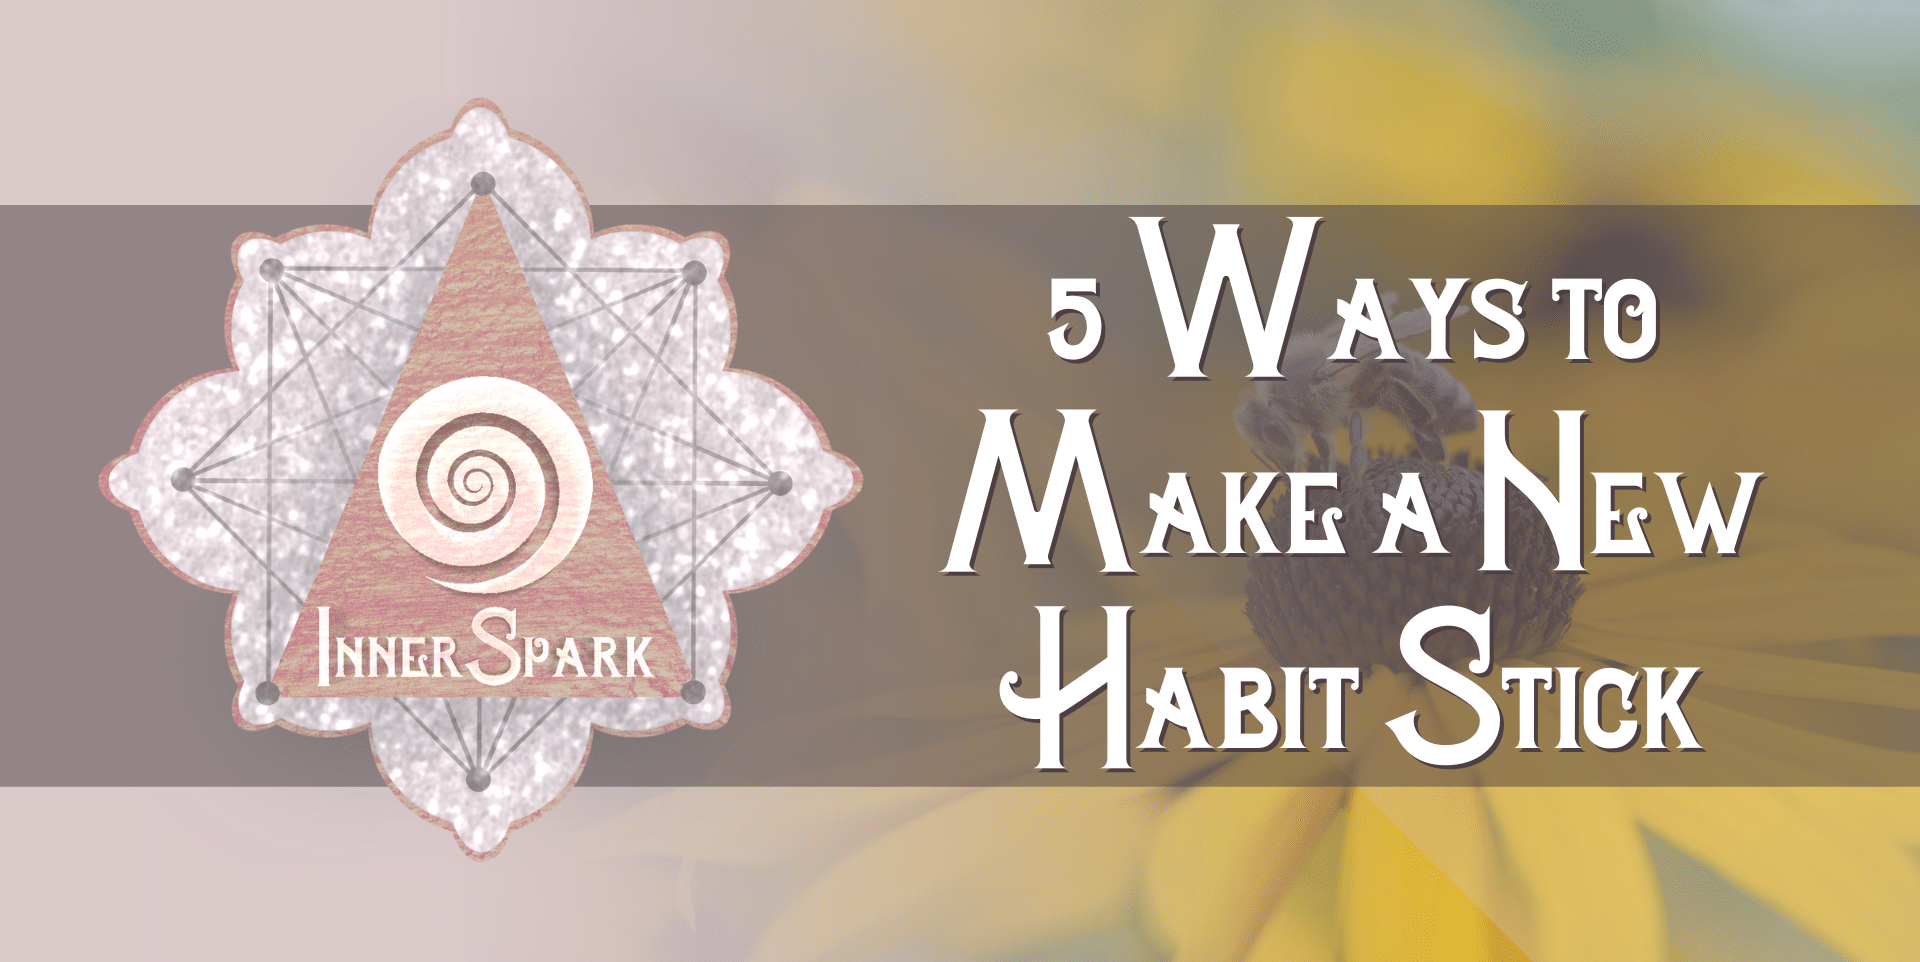 5 Ways to Make a New Habit Stick